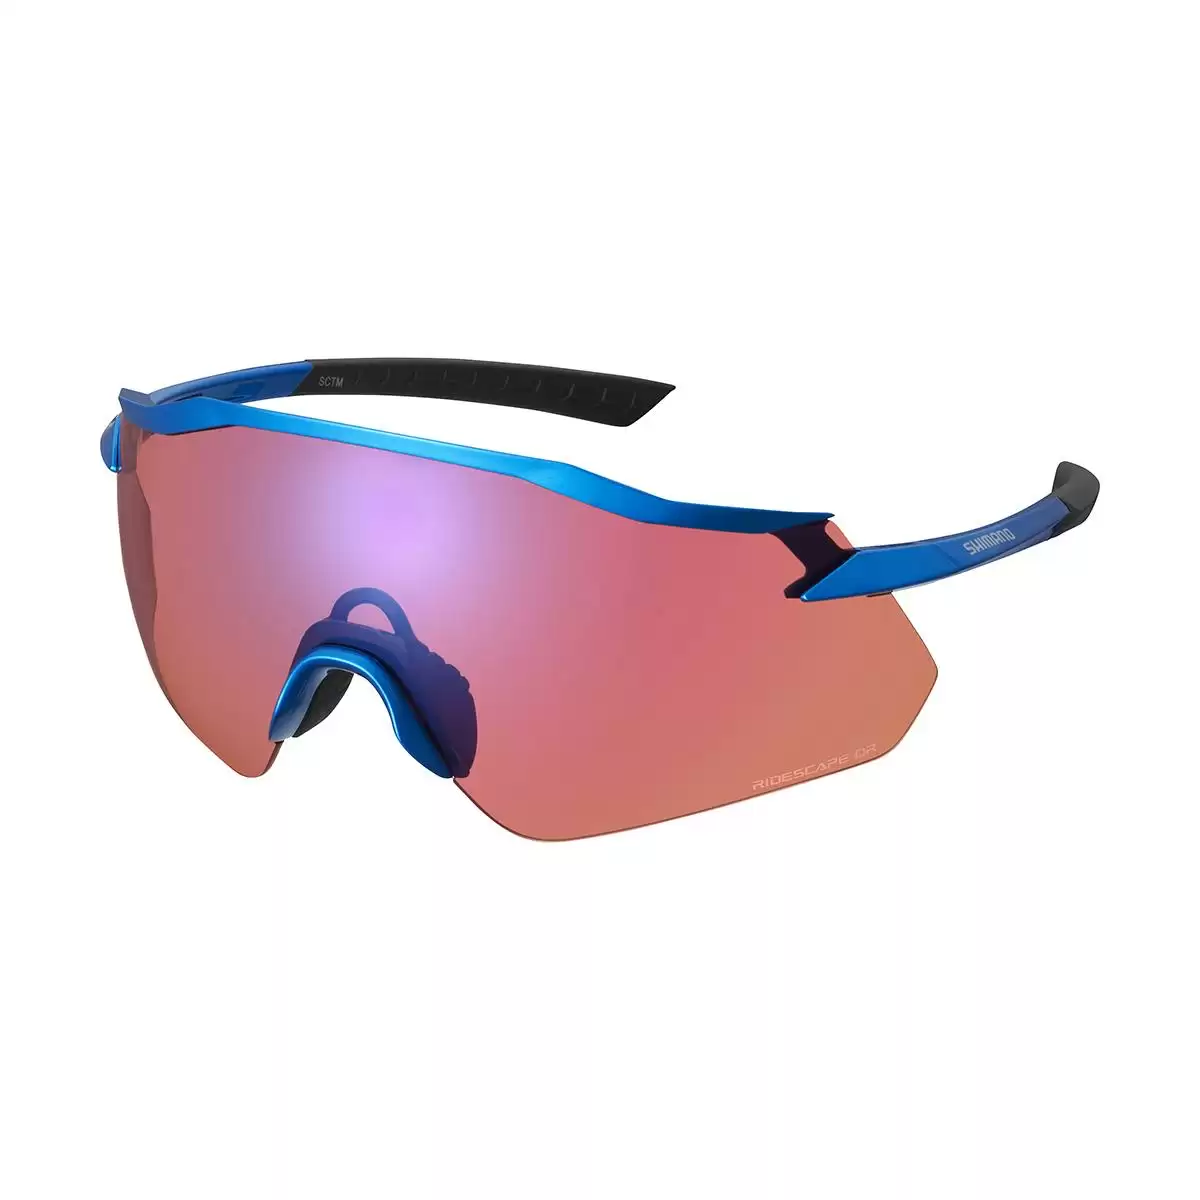 CE-EQNX4 Gafas todoterreno Ridescape con lente azul Equinox - image